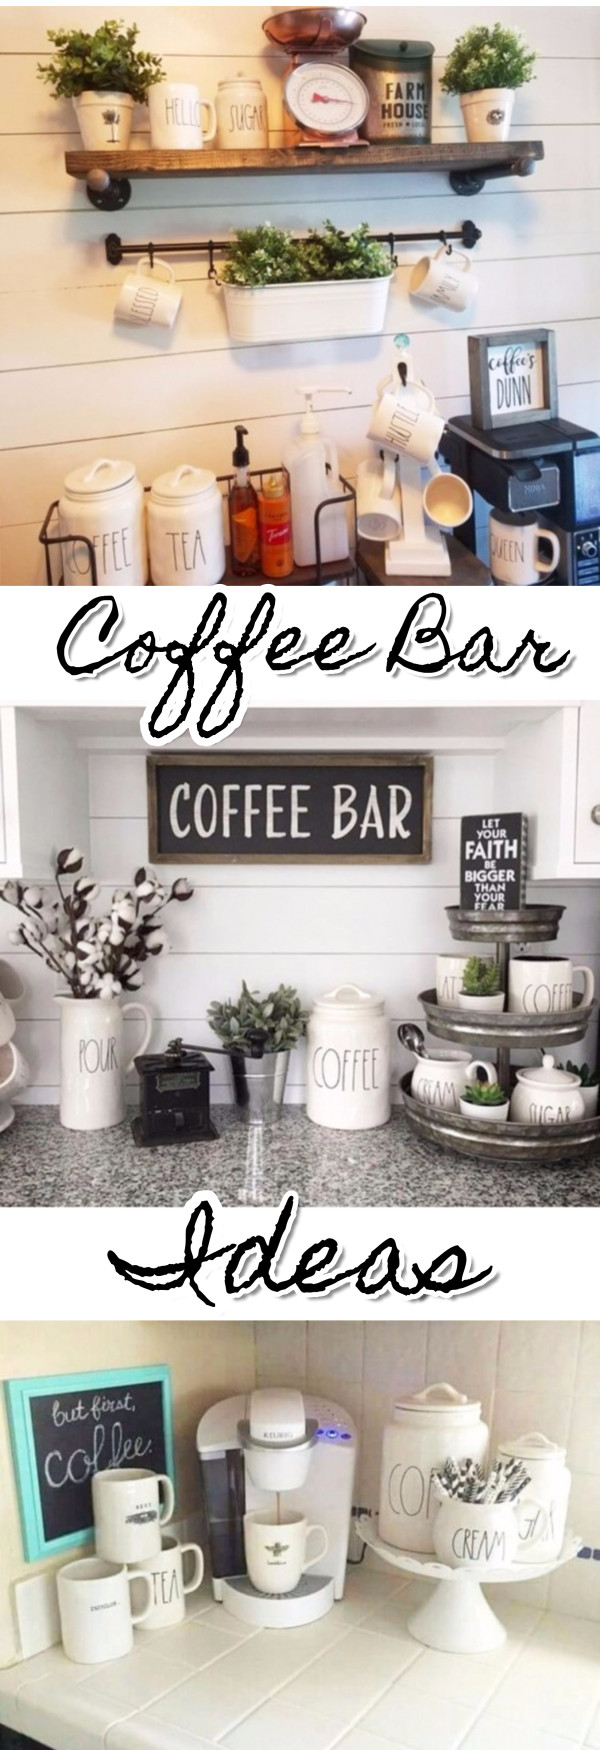 Coffee bar set up and organization ideas